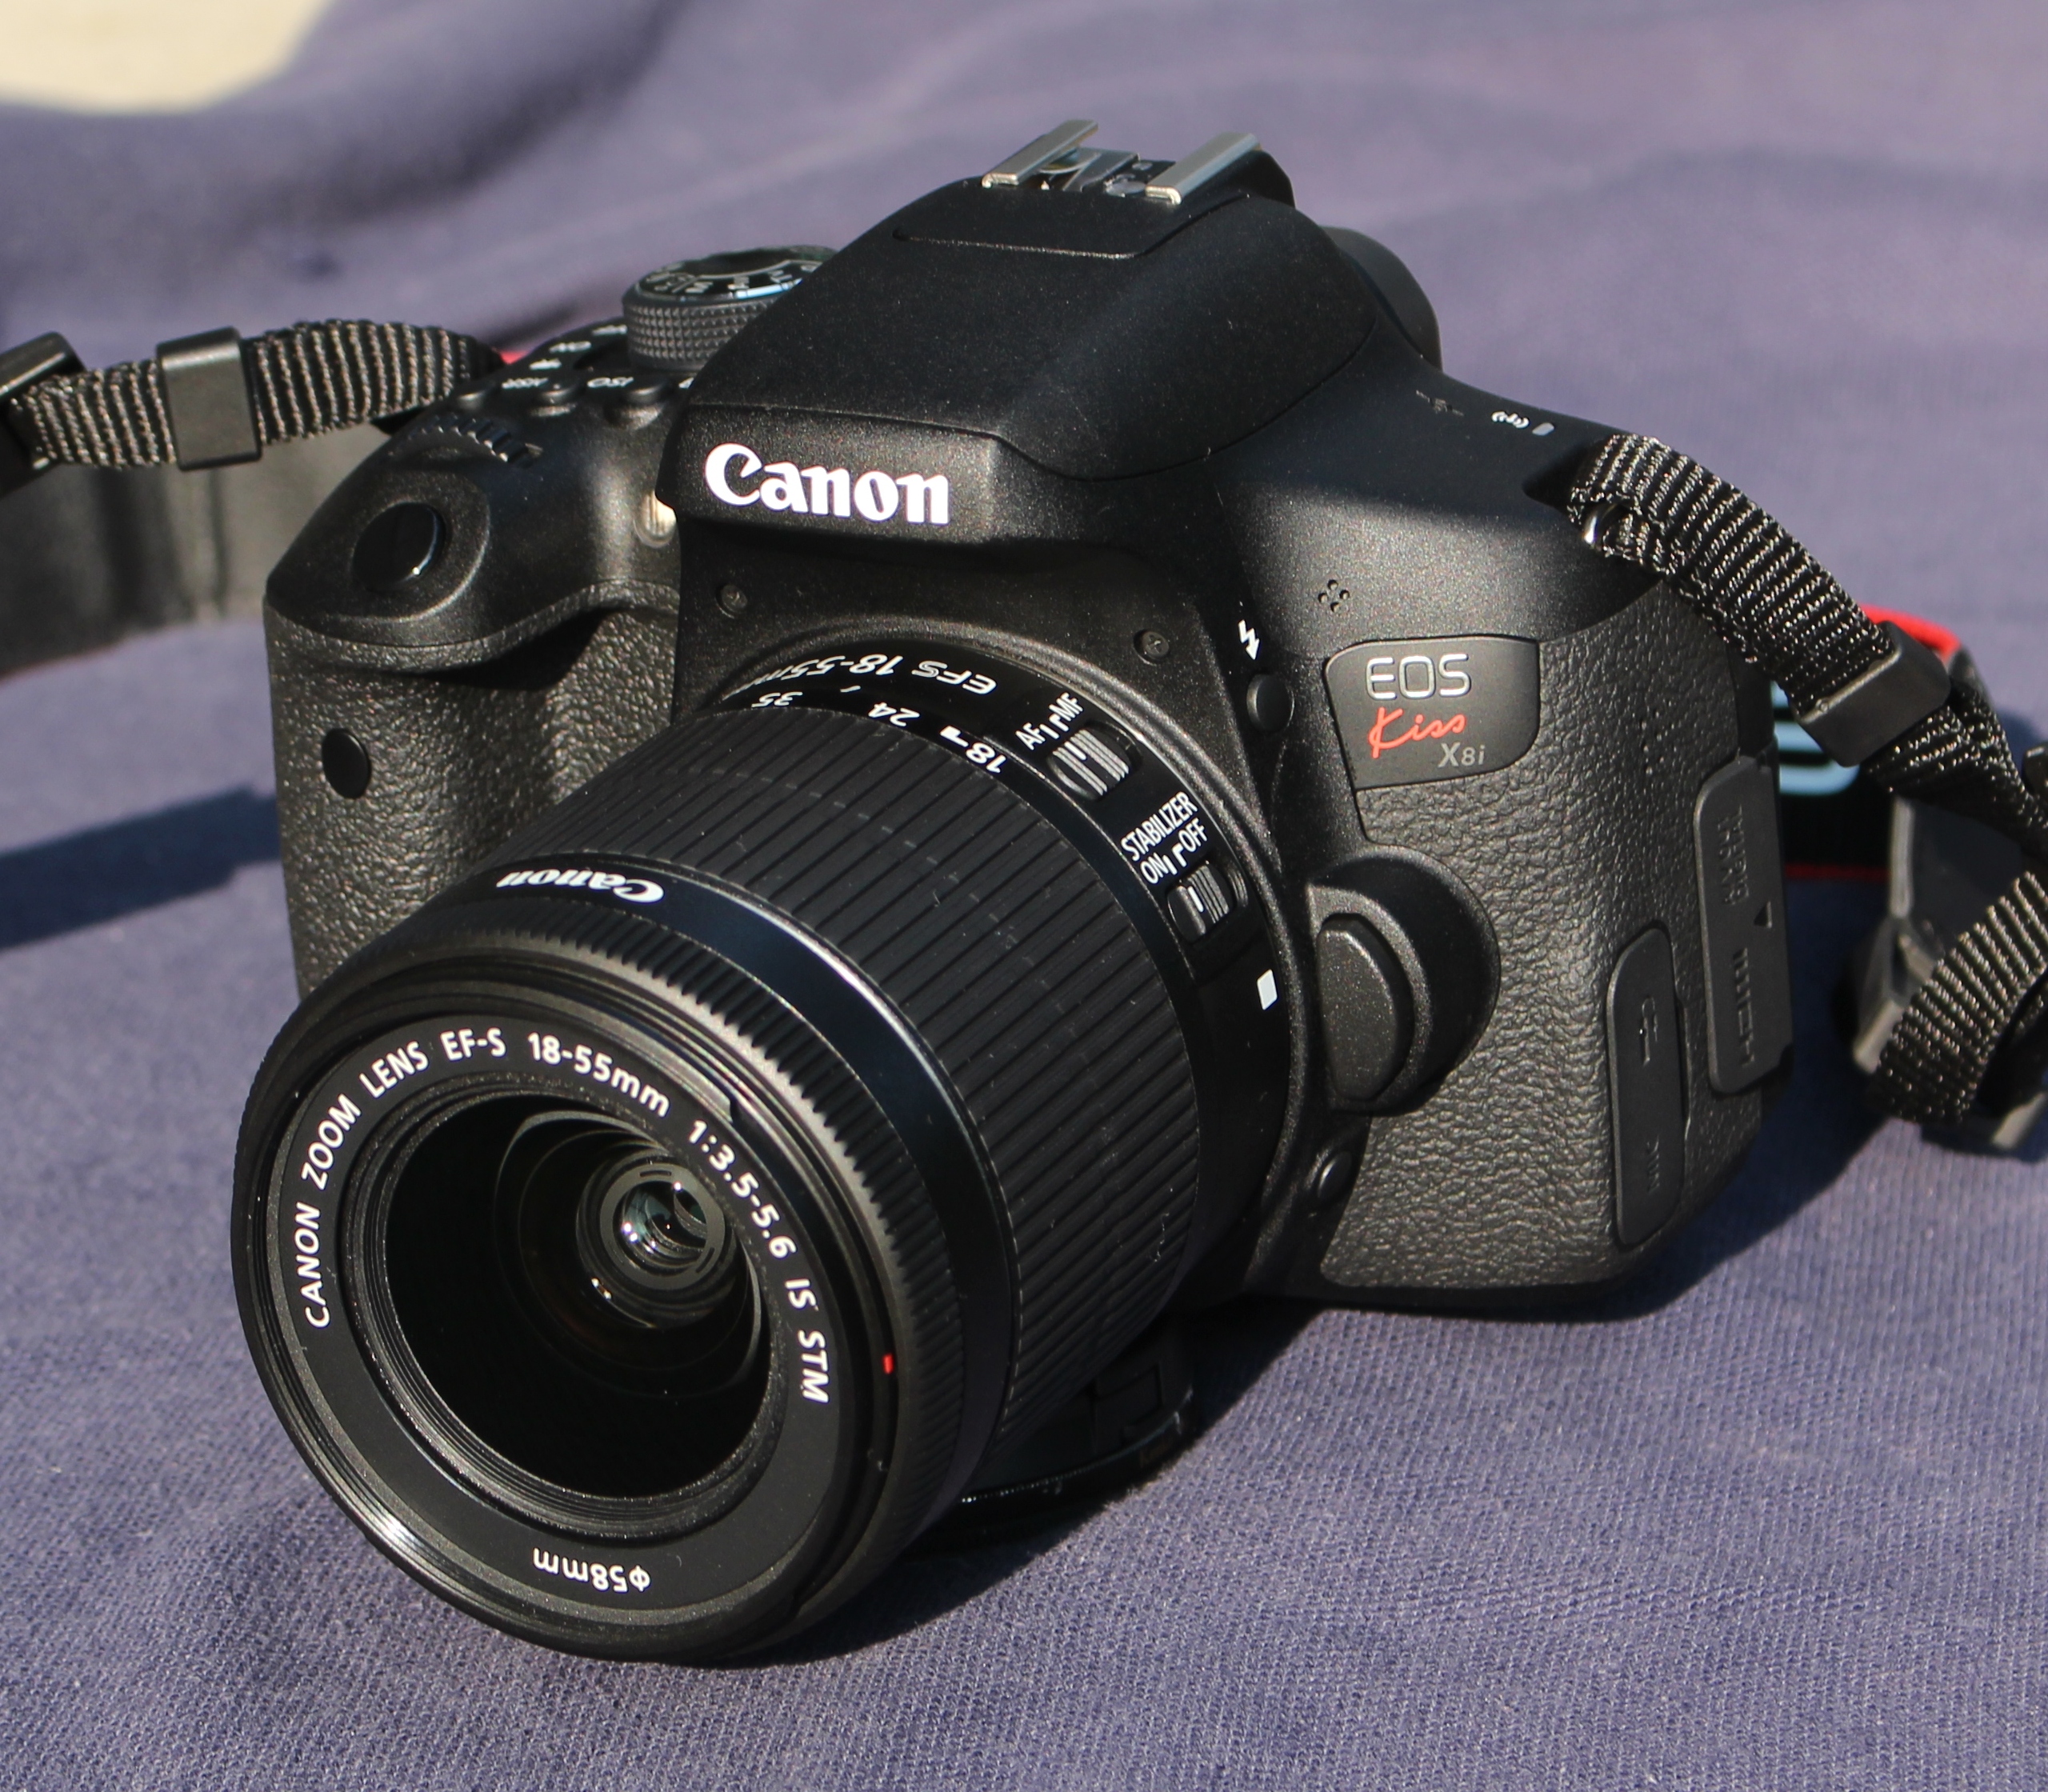 Canon EOS kiss x8i